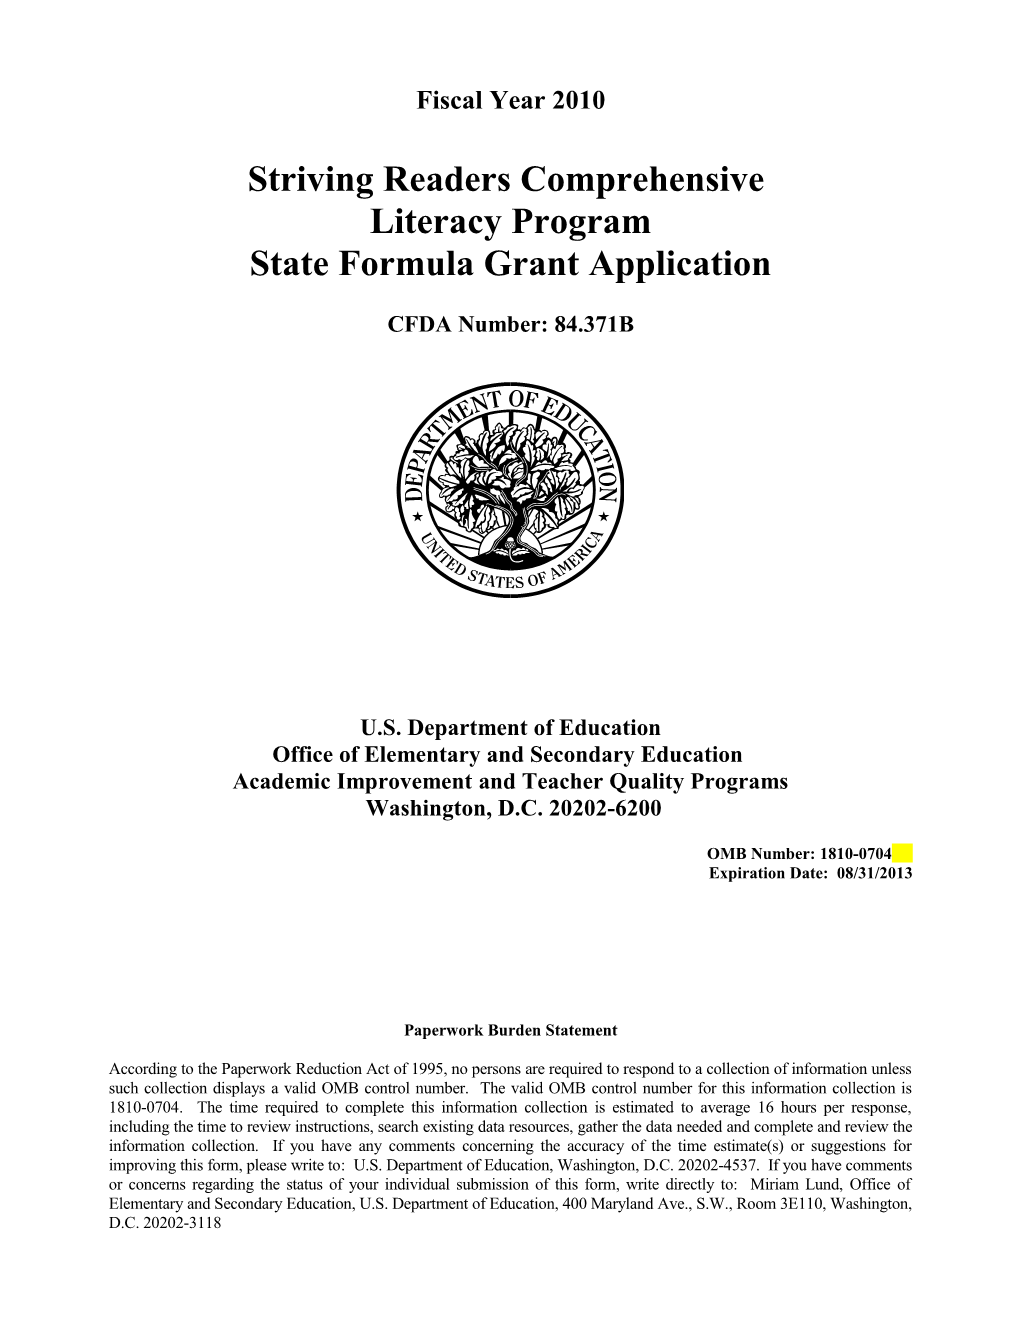 FY 2010 Striving Readers Comprehensive Literacy Program State Formula Grant Application